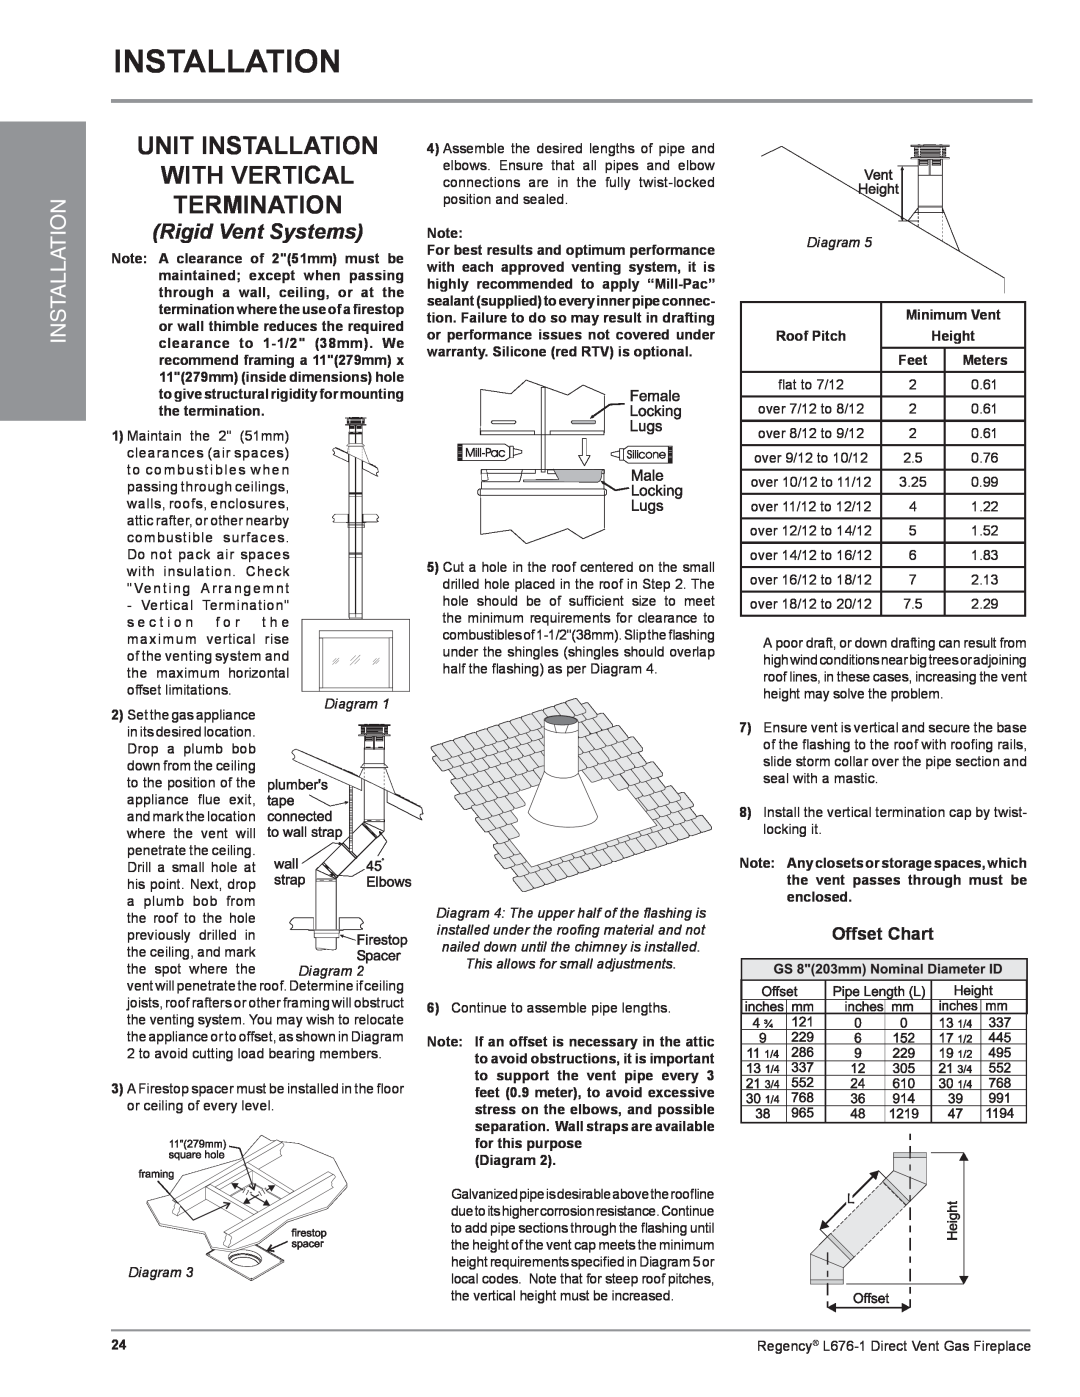 Regency L676-NG1, L676-1 Unit Installation With Vertical Termination, Rigid Vent Systems, Diagram, Minimum Vent, Feet 